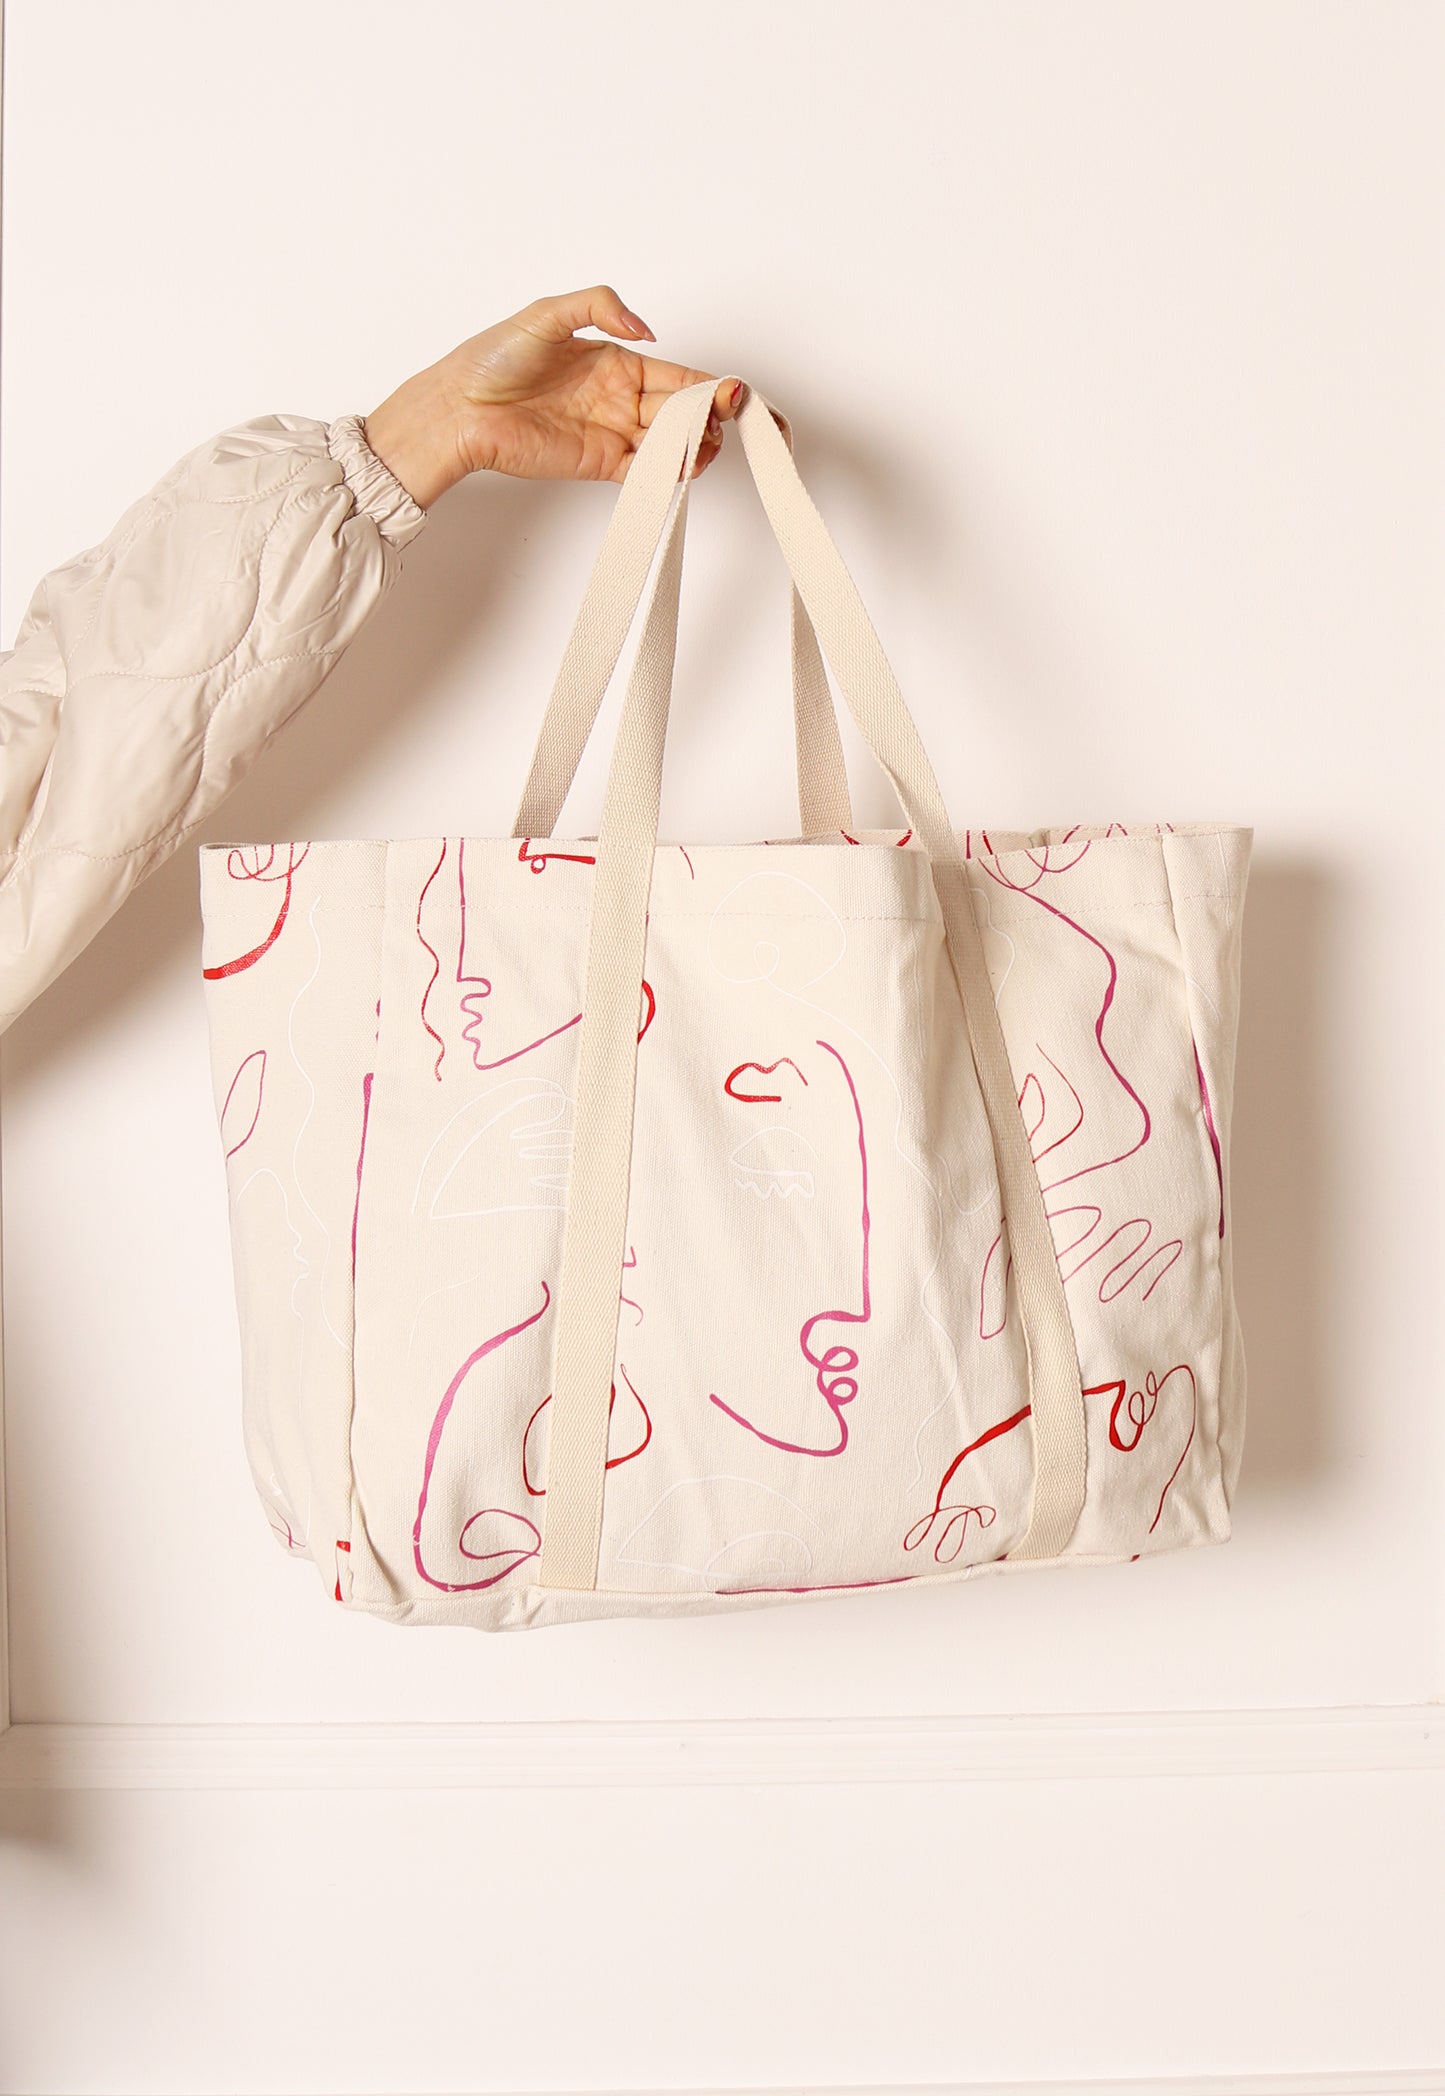 VILA Abstract Faces Canvas Tote Shopper Bag in Cream & Pink Tones - vietnamzoom